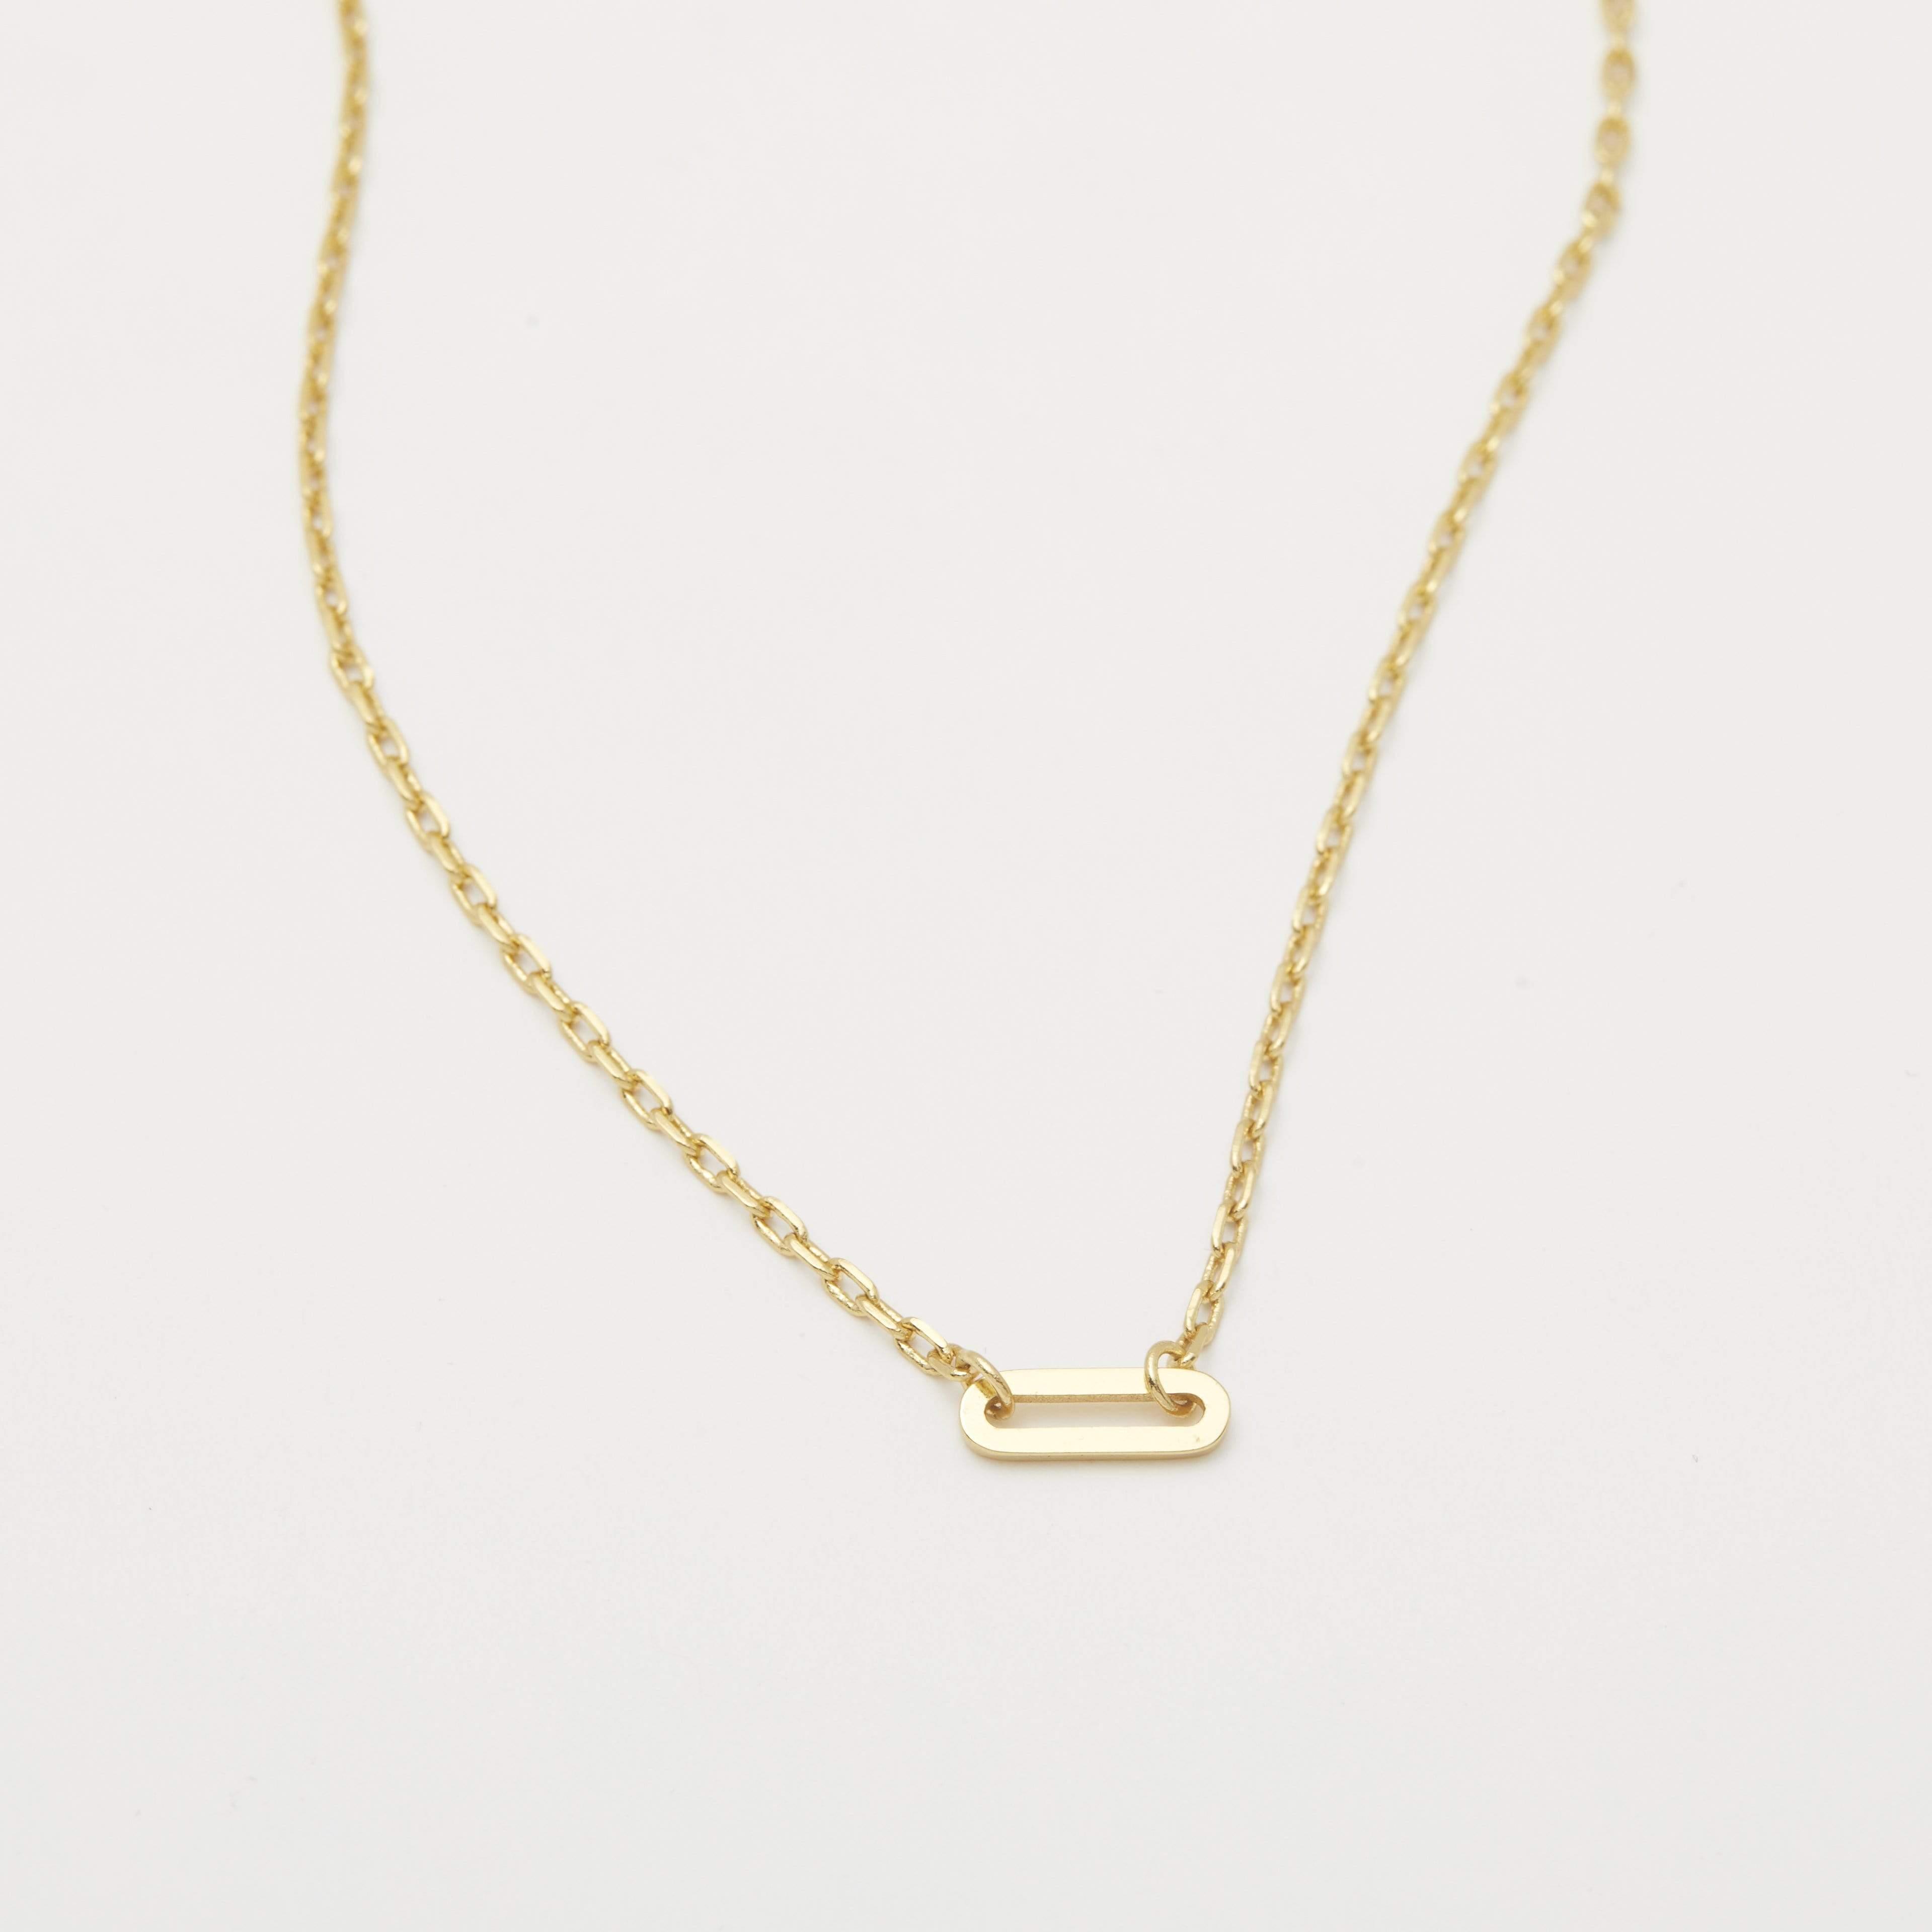 Gorjana Parker Charm Necklace in Gold (Metallic) - Lyst